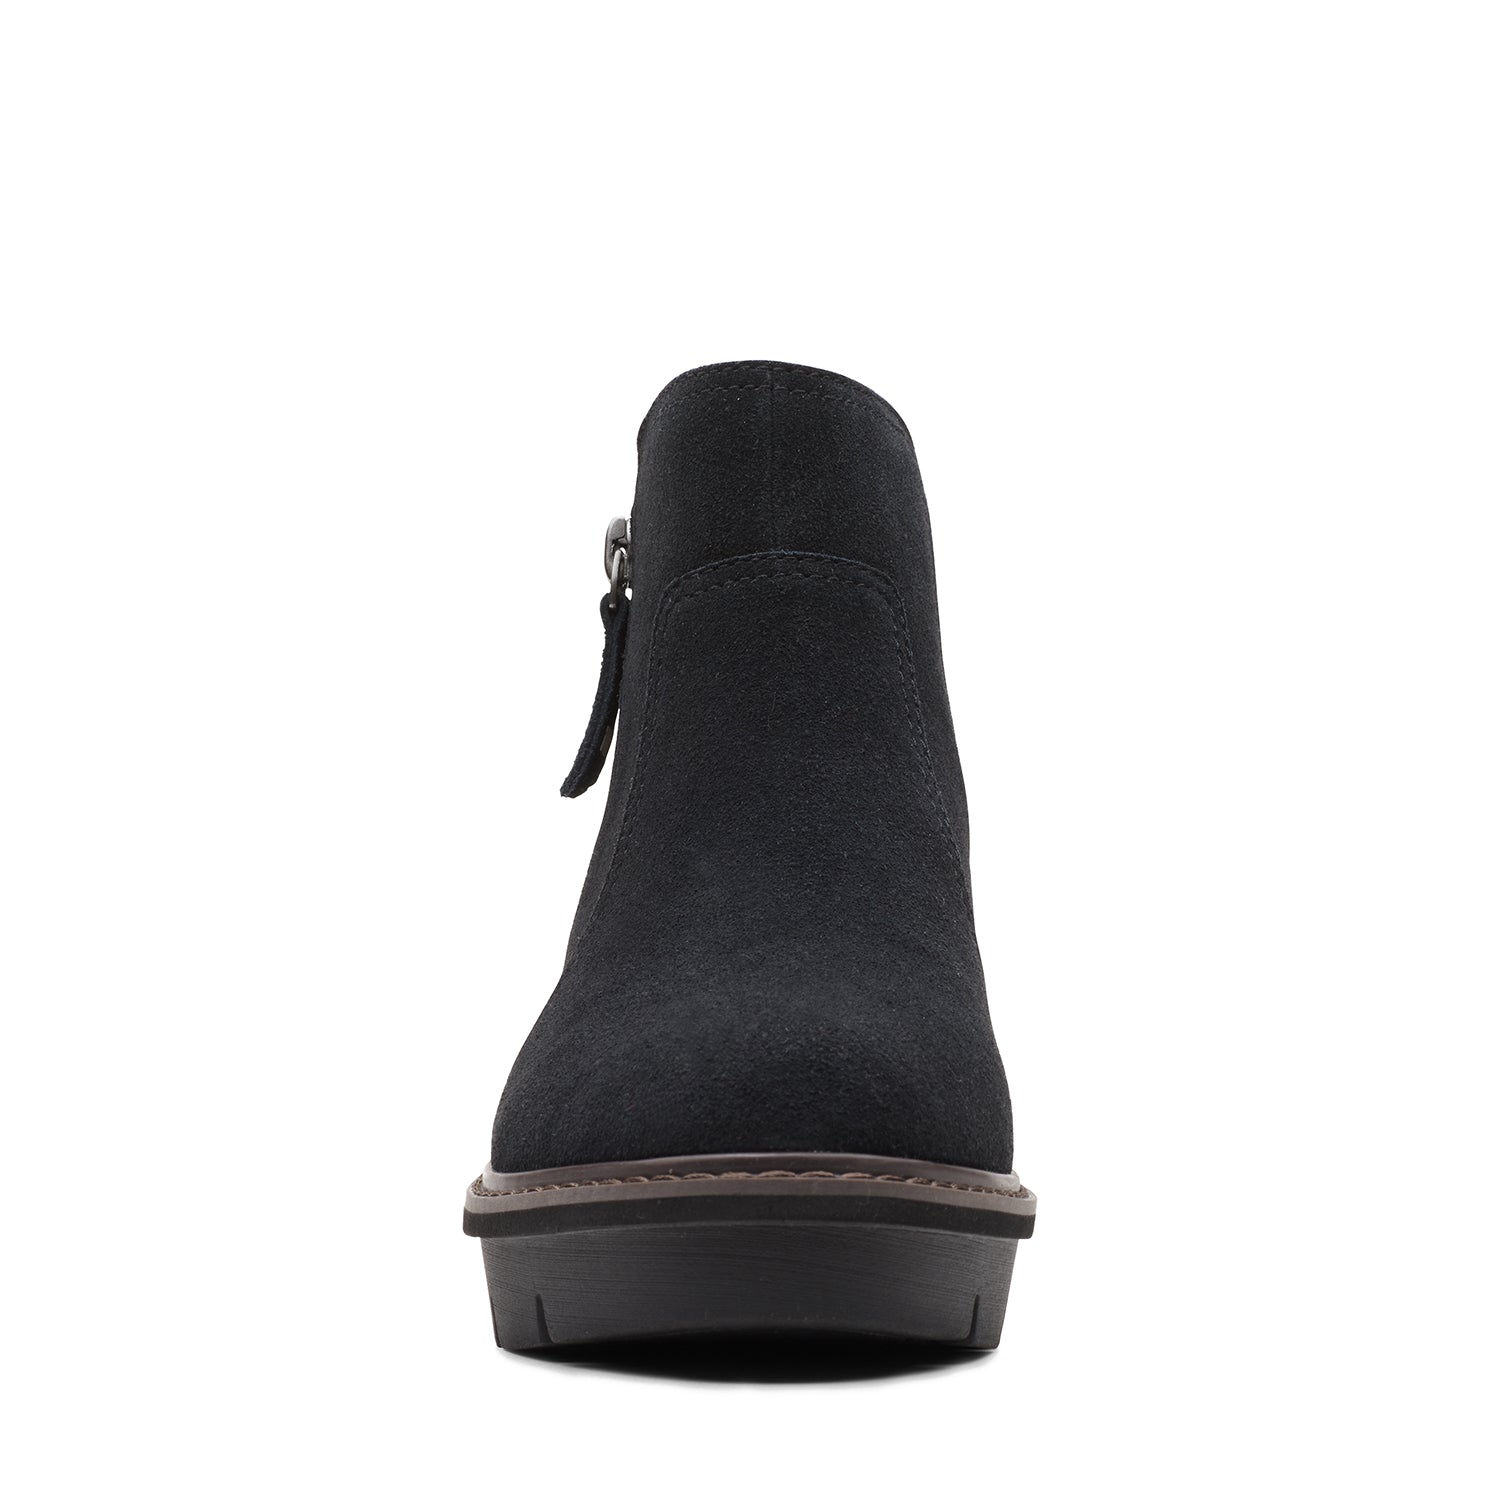 Clarks Airabell Zip Boots - Black Suede - 261633104 - D Width (Standard Fit)